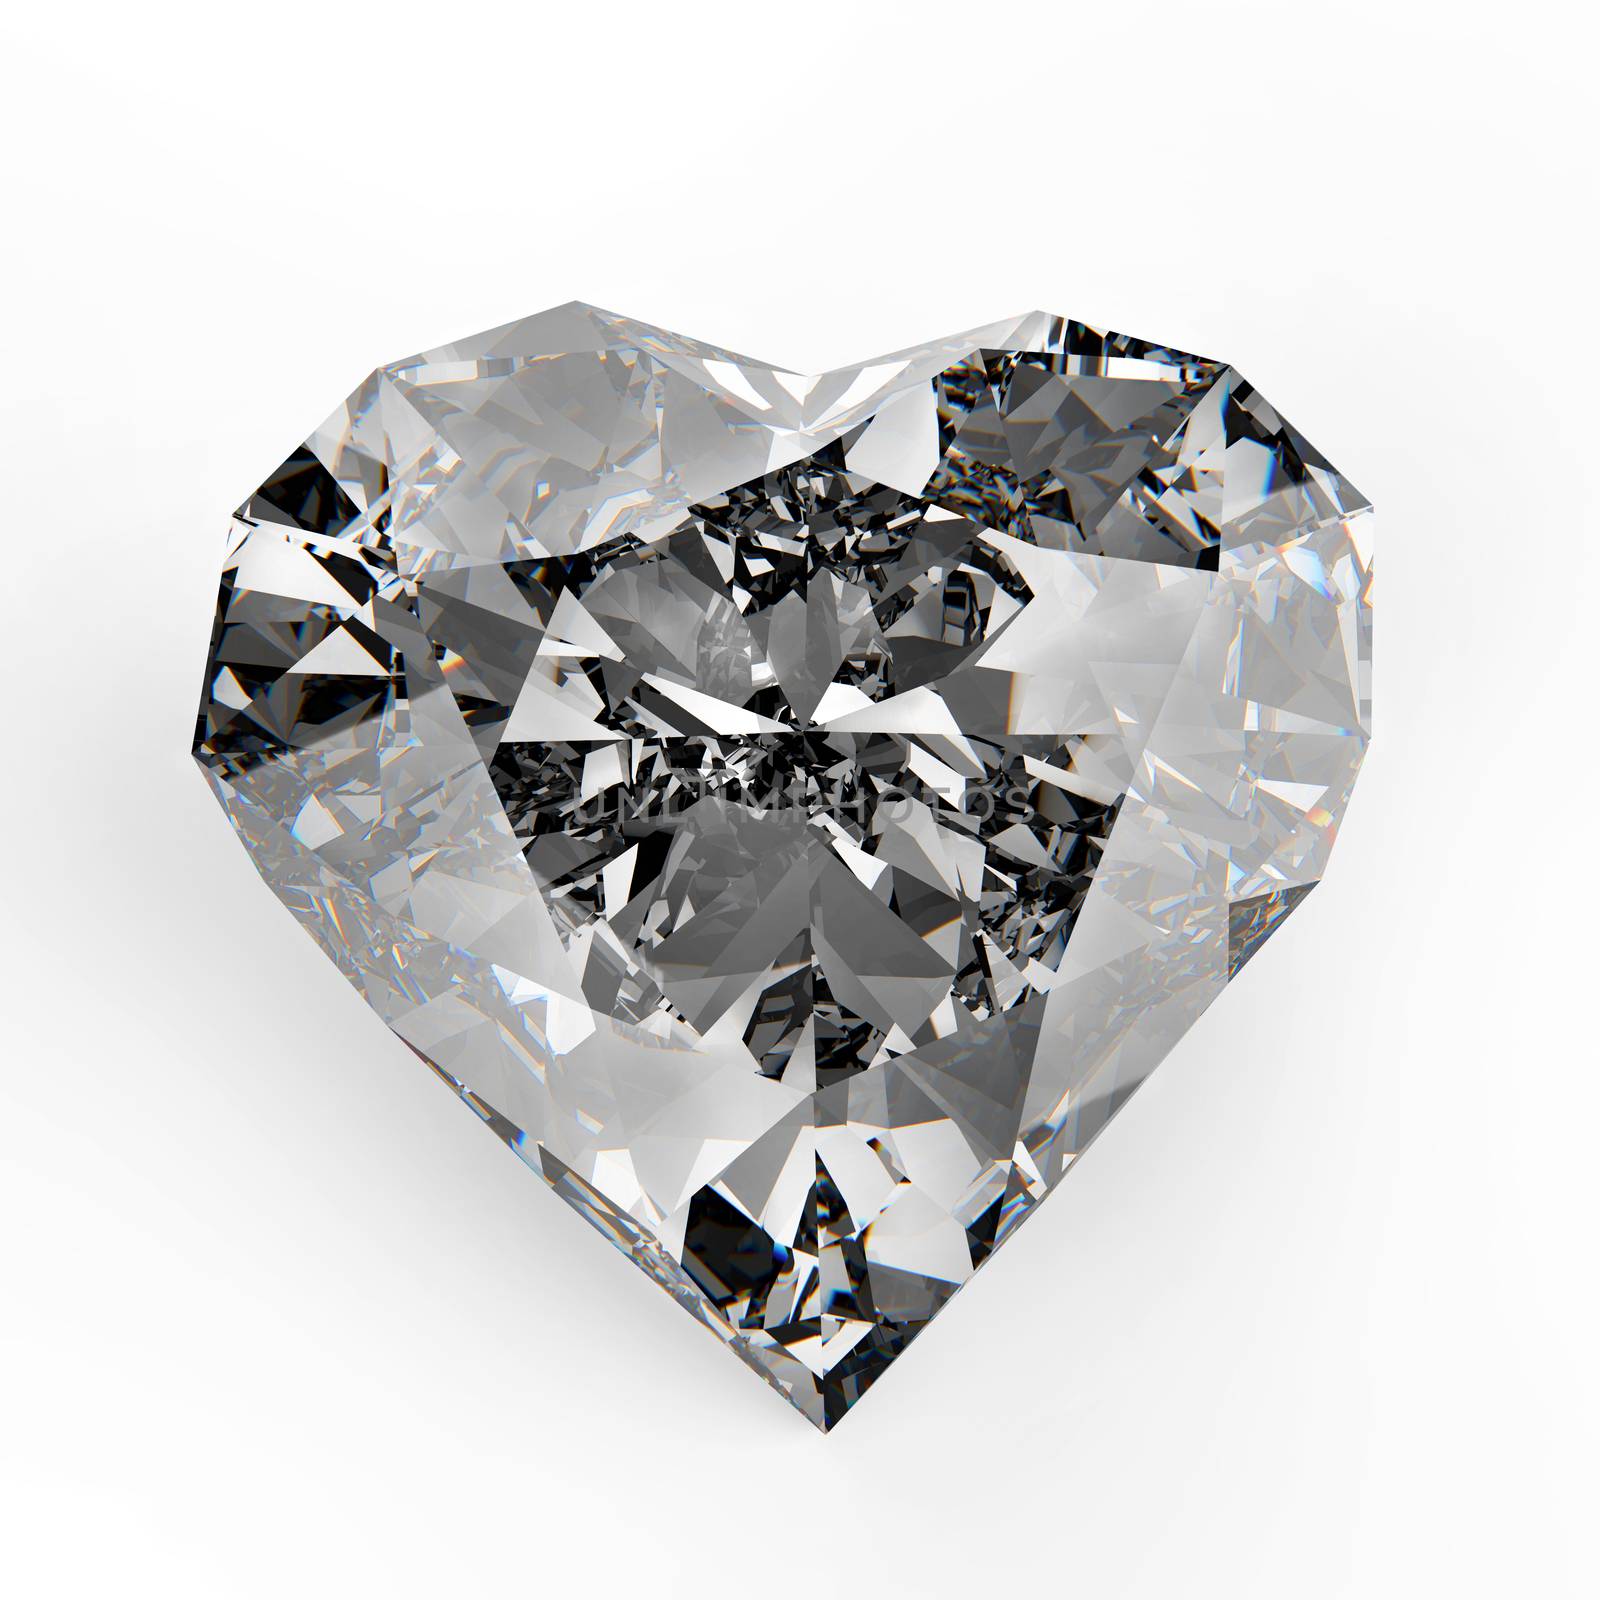 diamond heart shape by everythingpossible